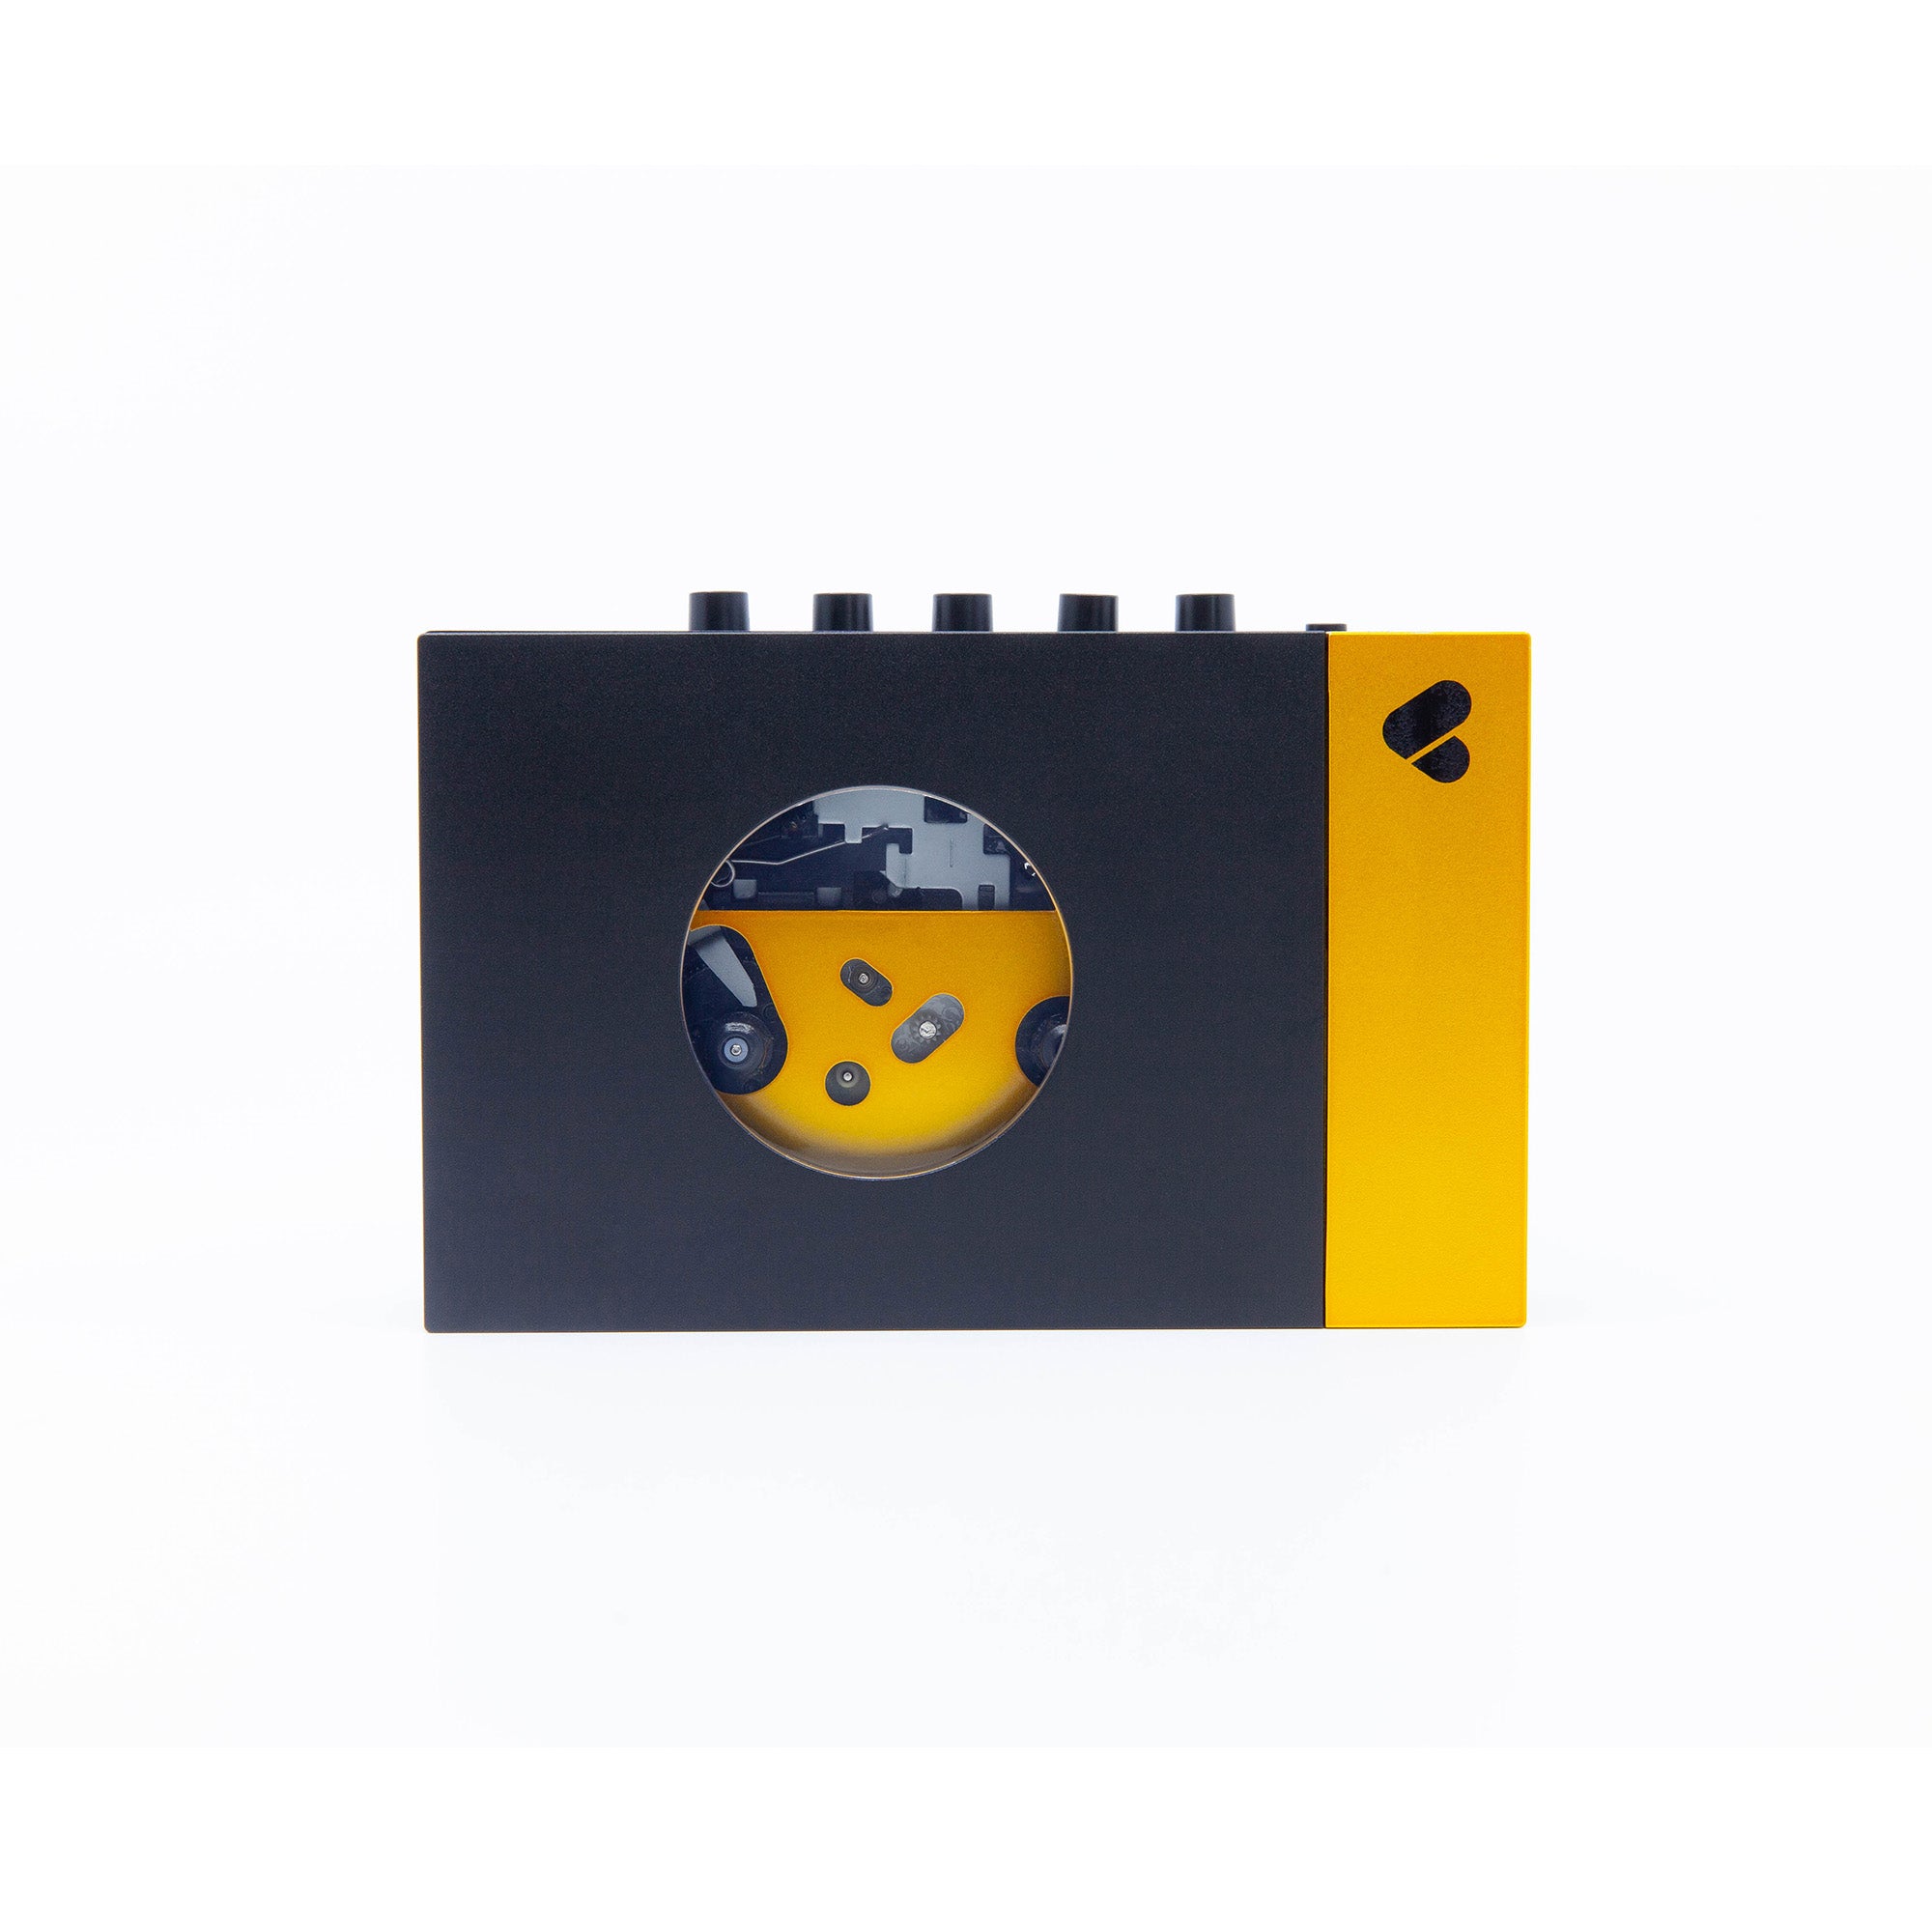 Black & yellow Cassette Player + Blank tape